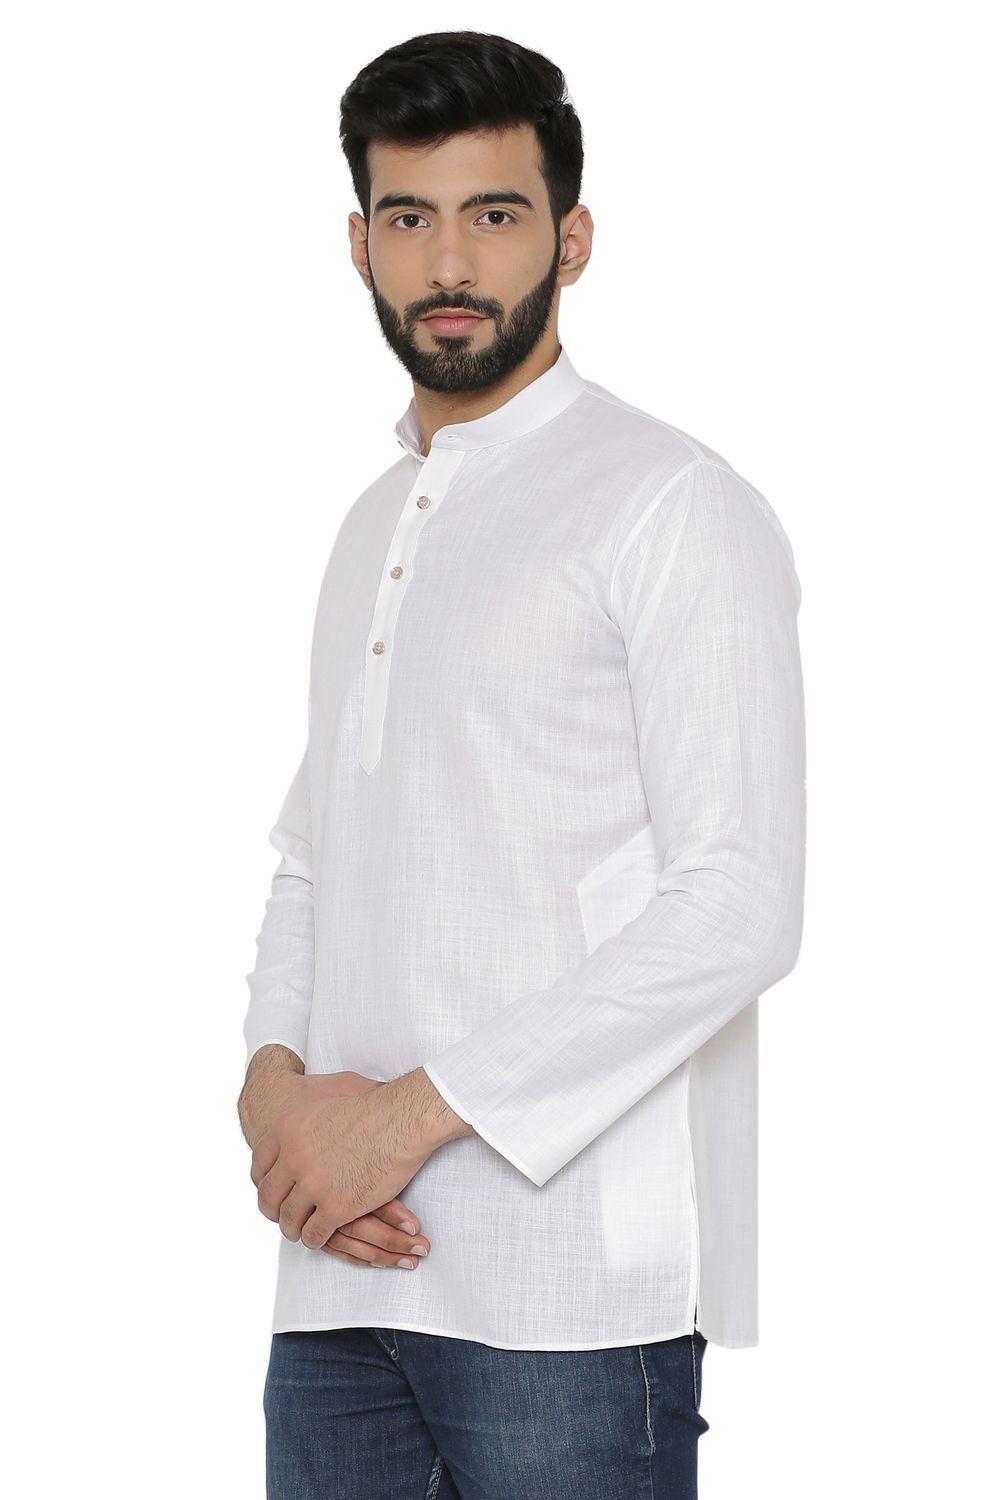 Cotton Silk Blend White Kurta Shirt